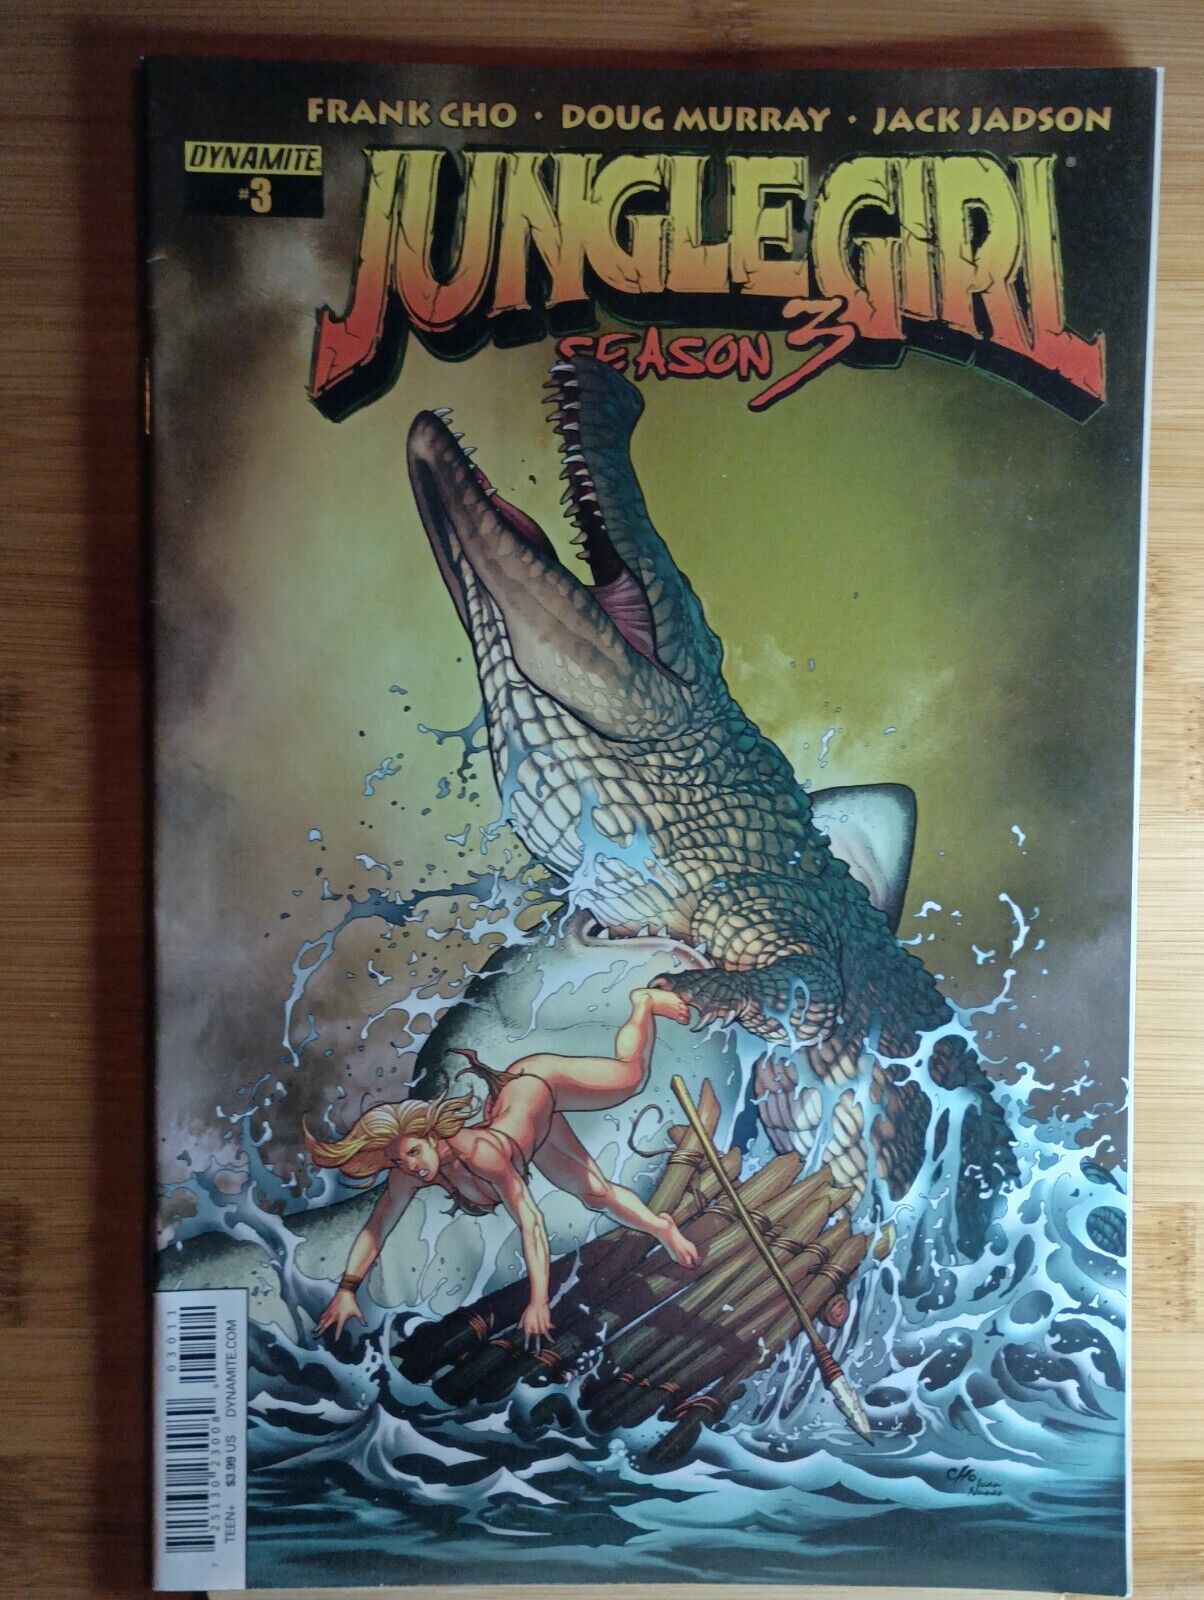 2015 Dynamite Comics Jungle Girl Season 3 Issue 3 Frank Cho Cover A Variant F/S